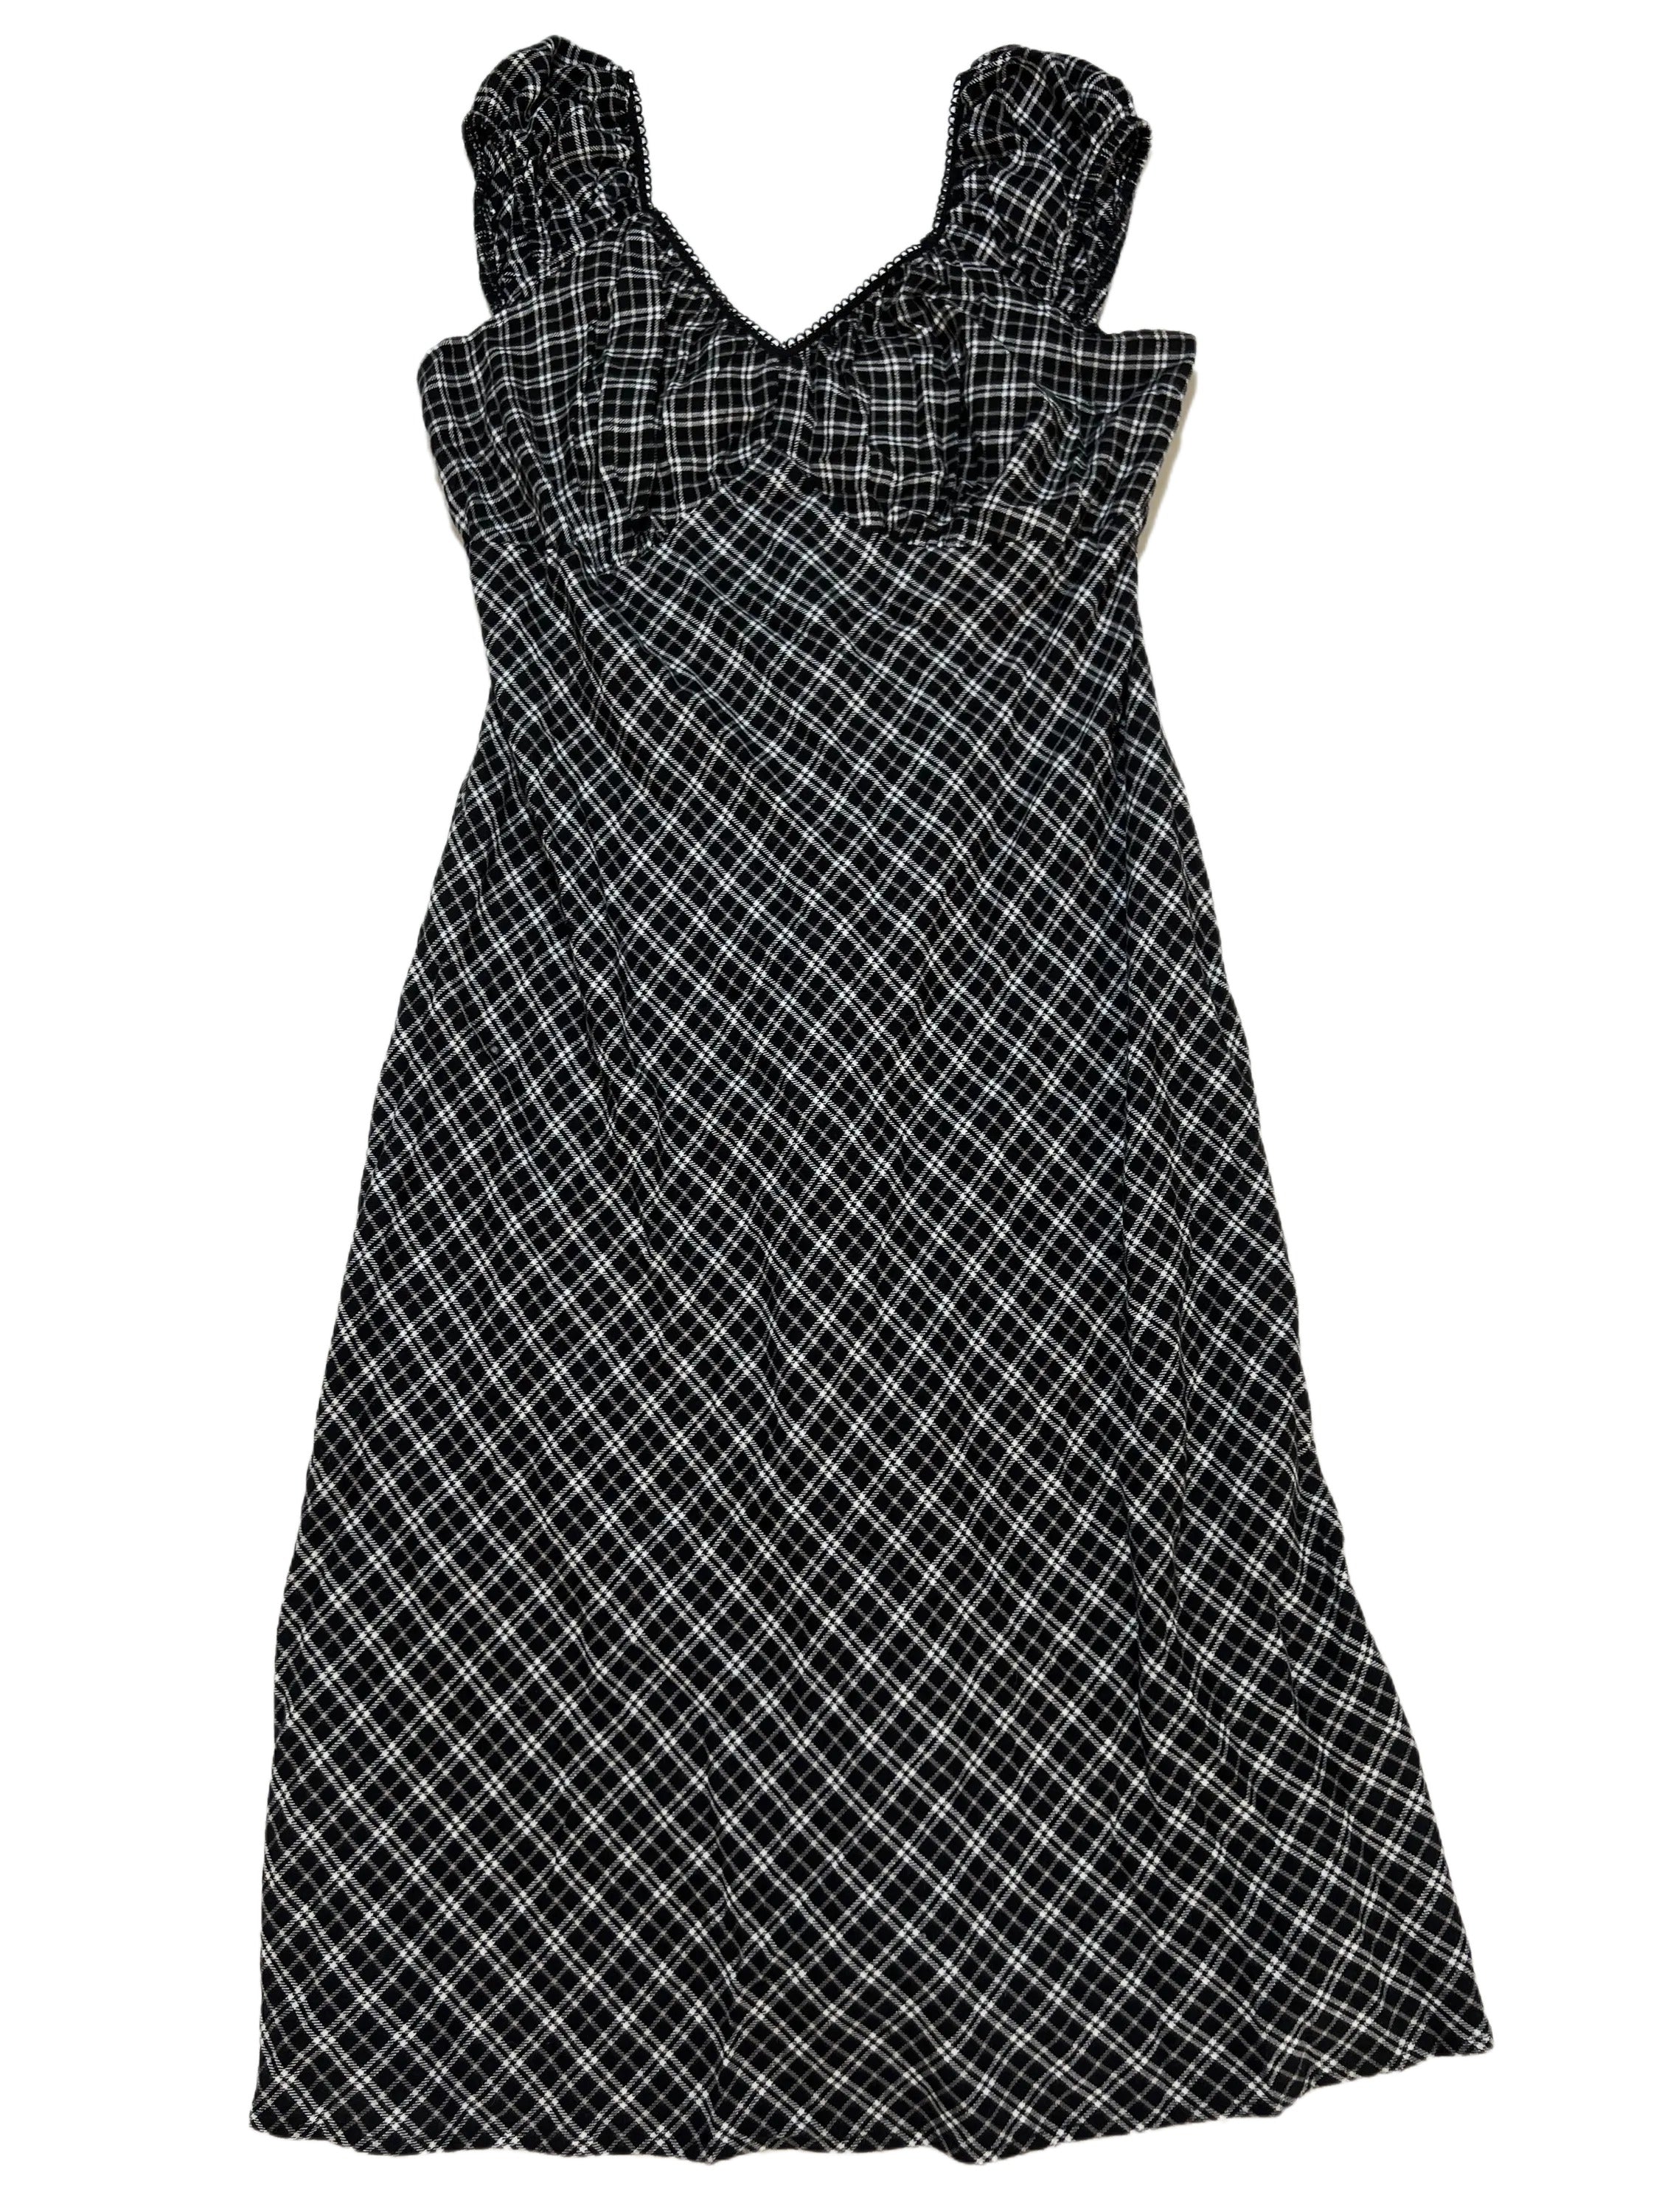 Forever 21 Women's Dress Small Black Tiered Summer Dress Sleeveless Stretch  | eBay